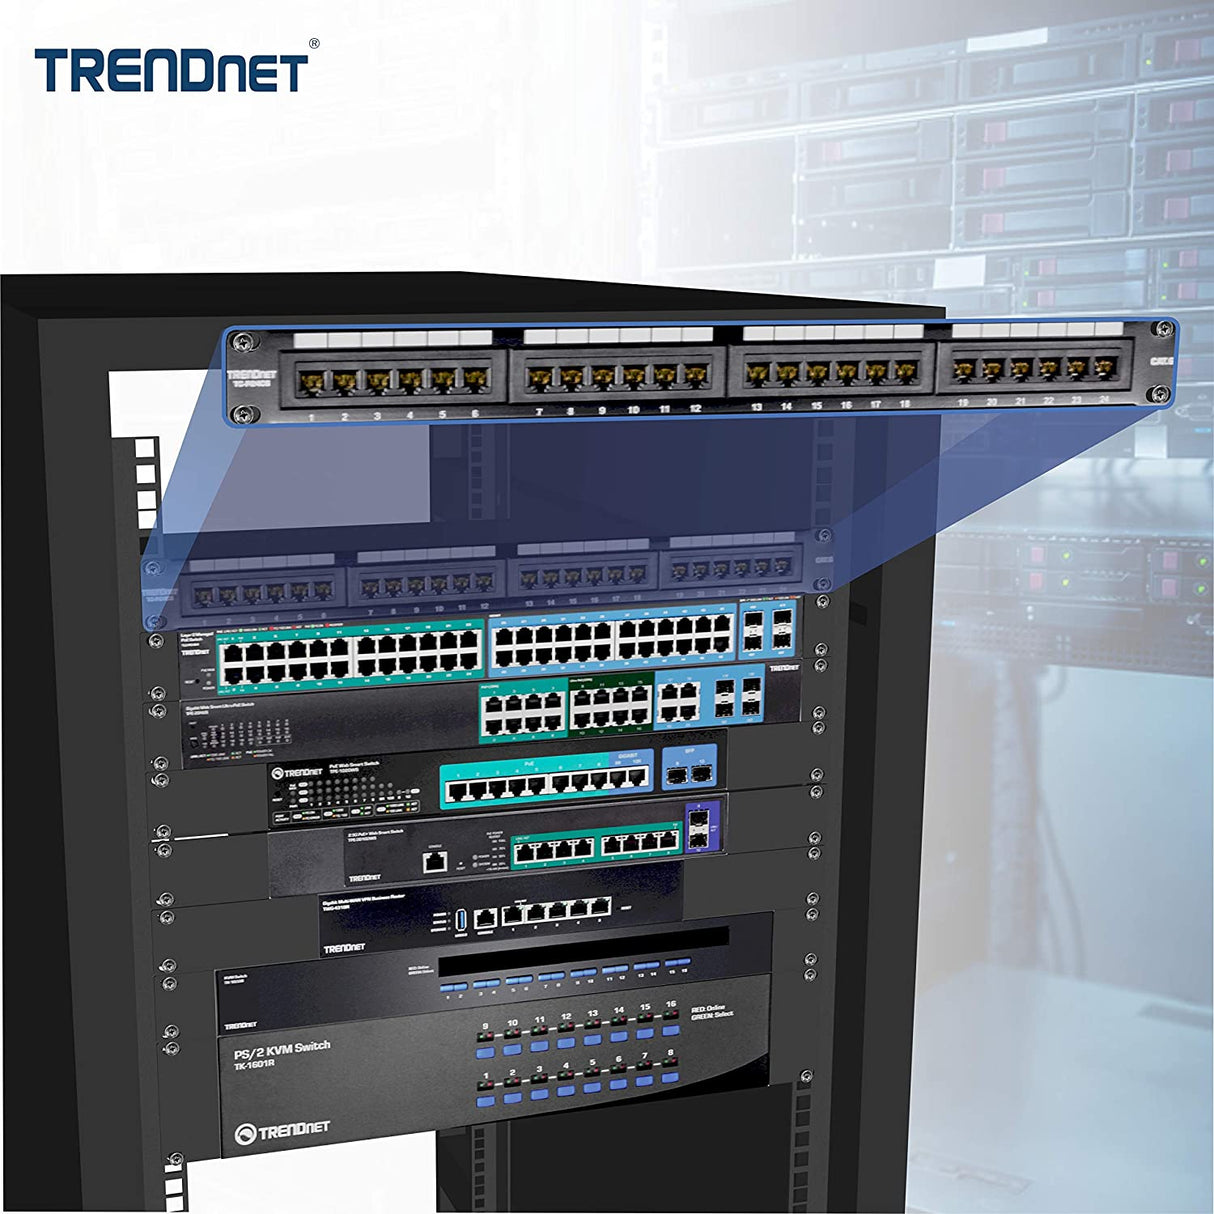 TRENDnet 24-Port Cat6 Unshielded Patch Panel, Wallmount or Rackmount, Compatible with Cat3,4,5,5e,6 Cabling, For Ethernet, Fast Ethernet, Gigabit Applications, Black, TC-P24C6